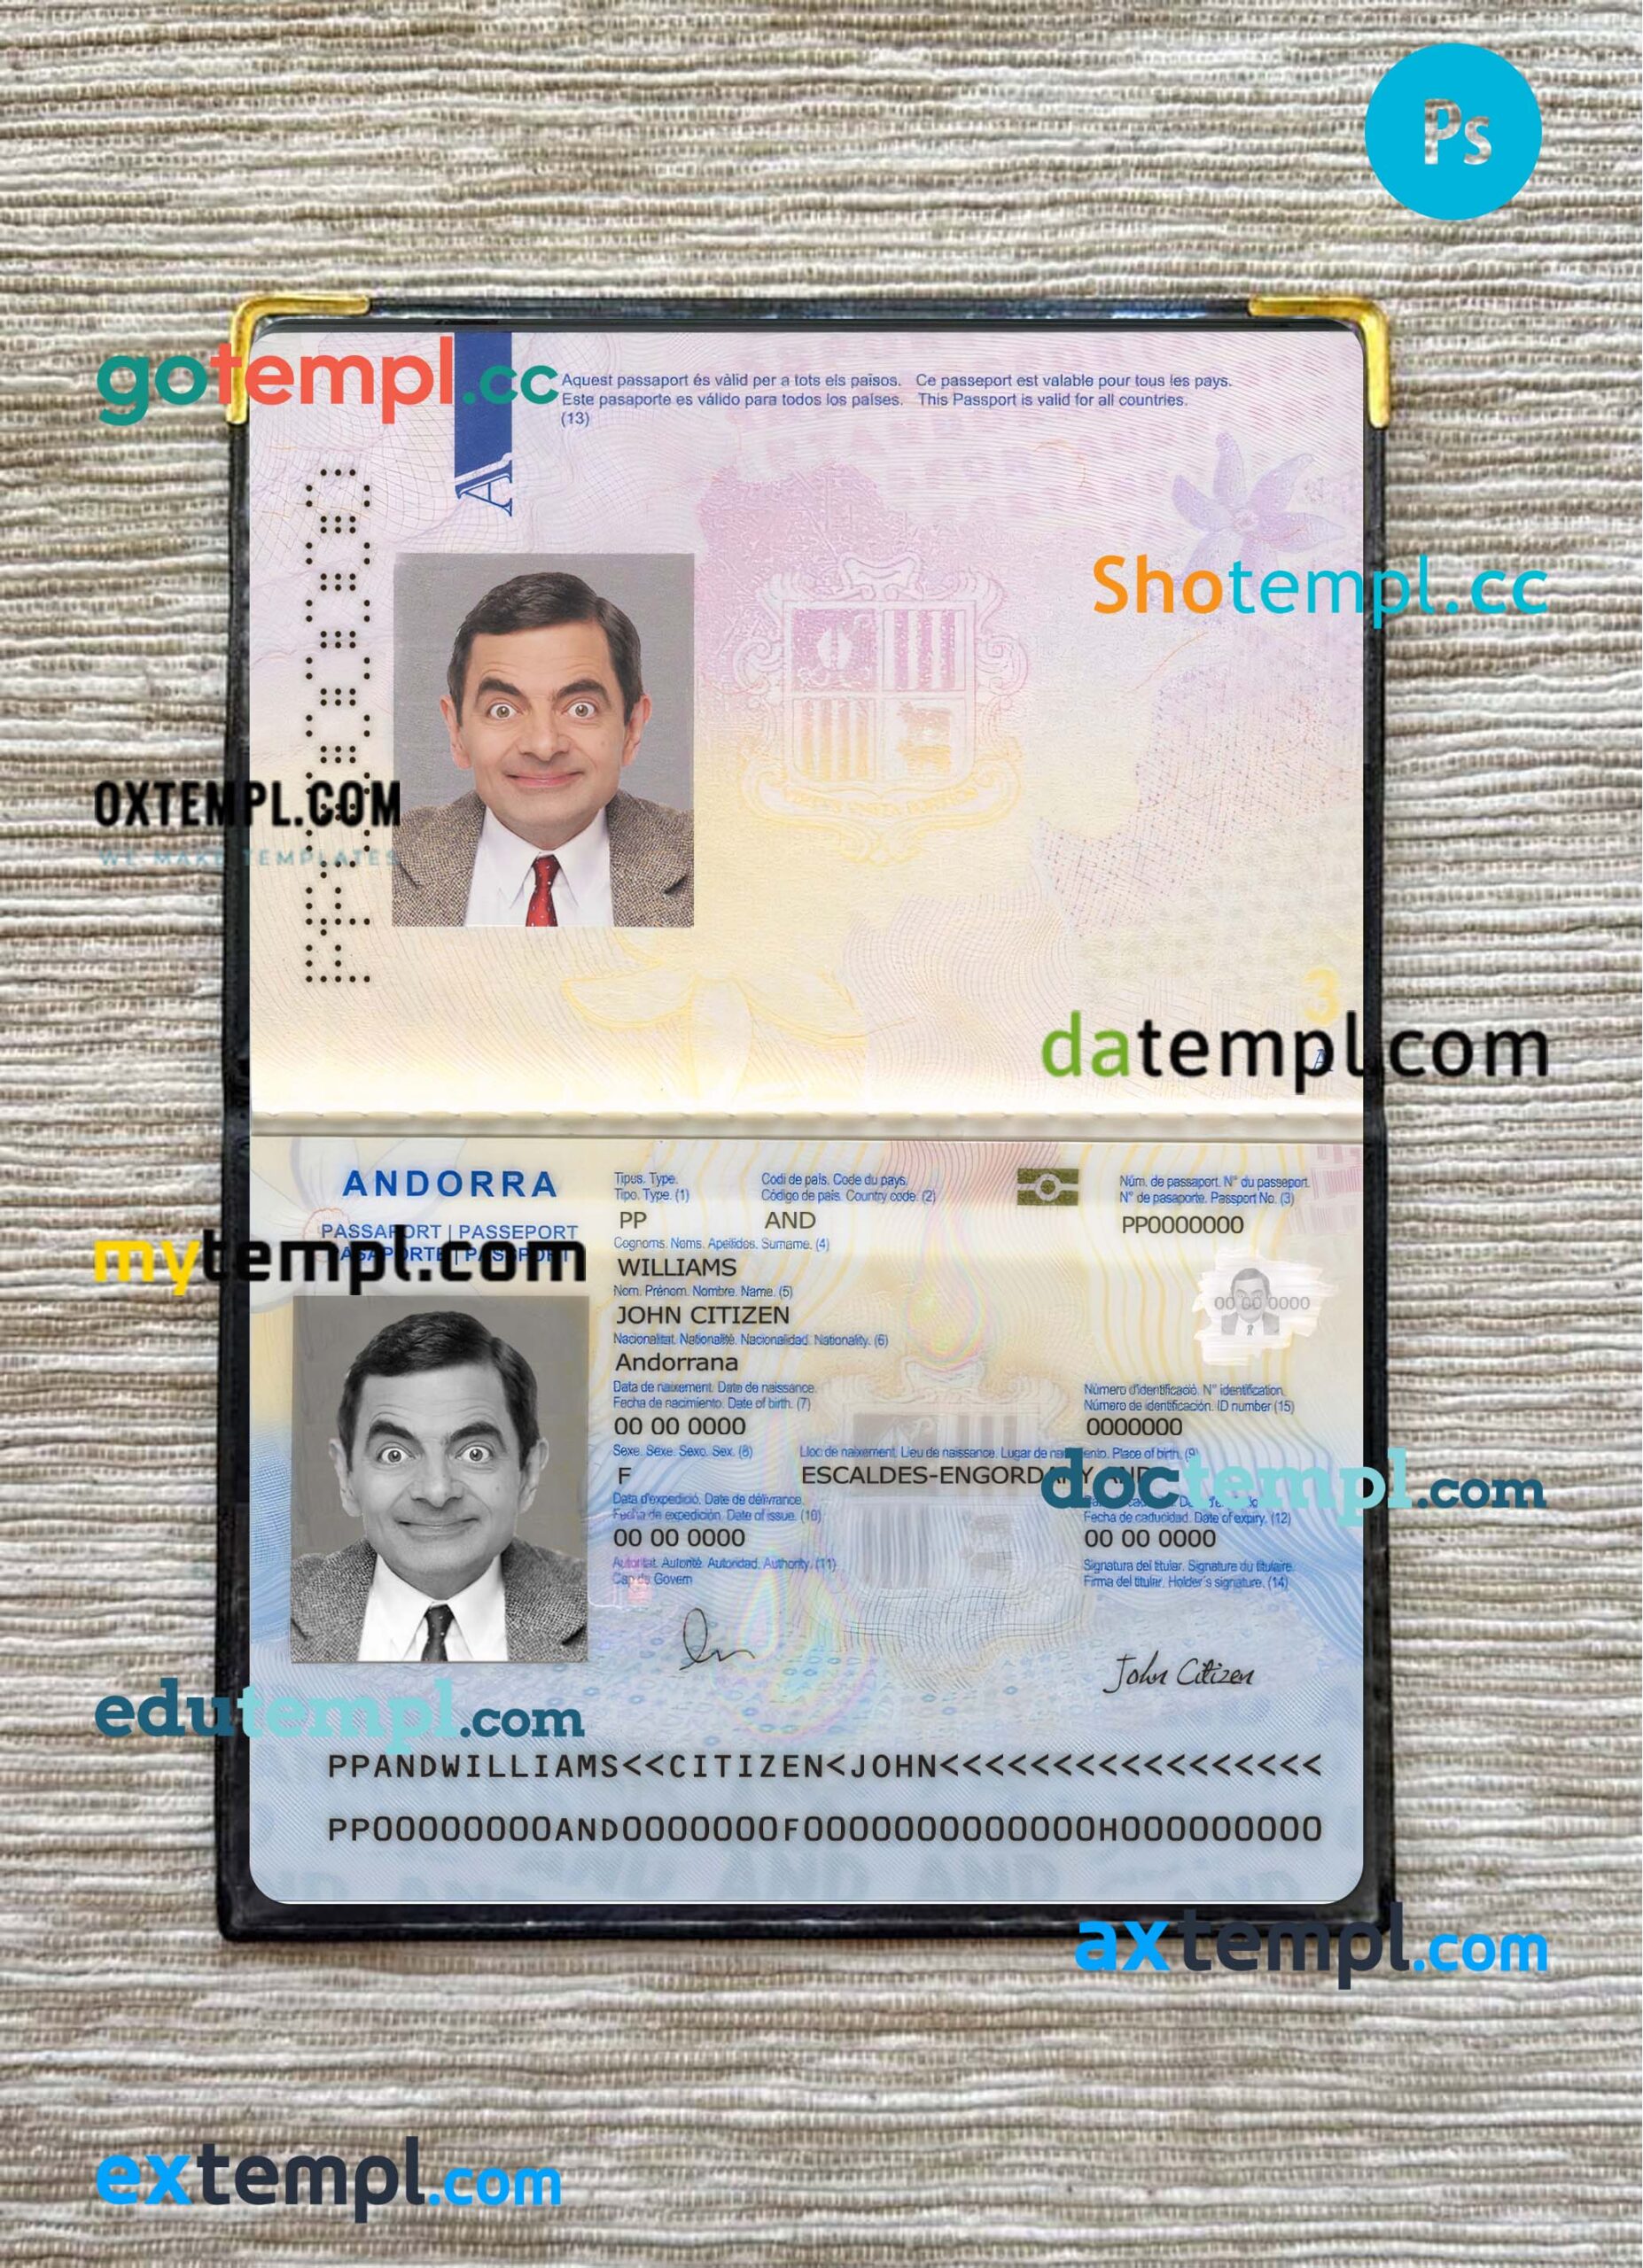 Ecuador cat (animal, pet) passport PSD template, completely editable